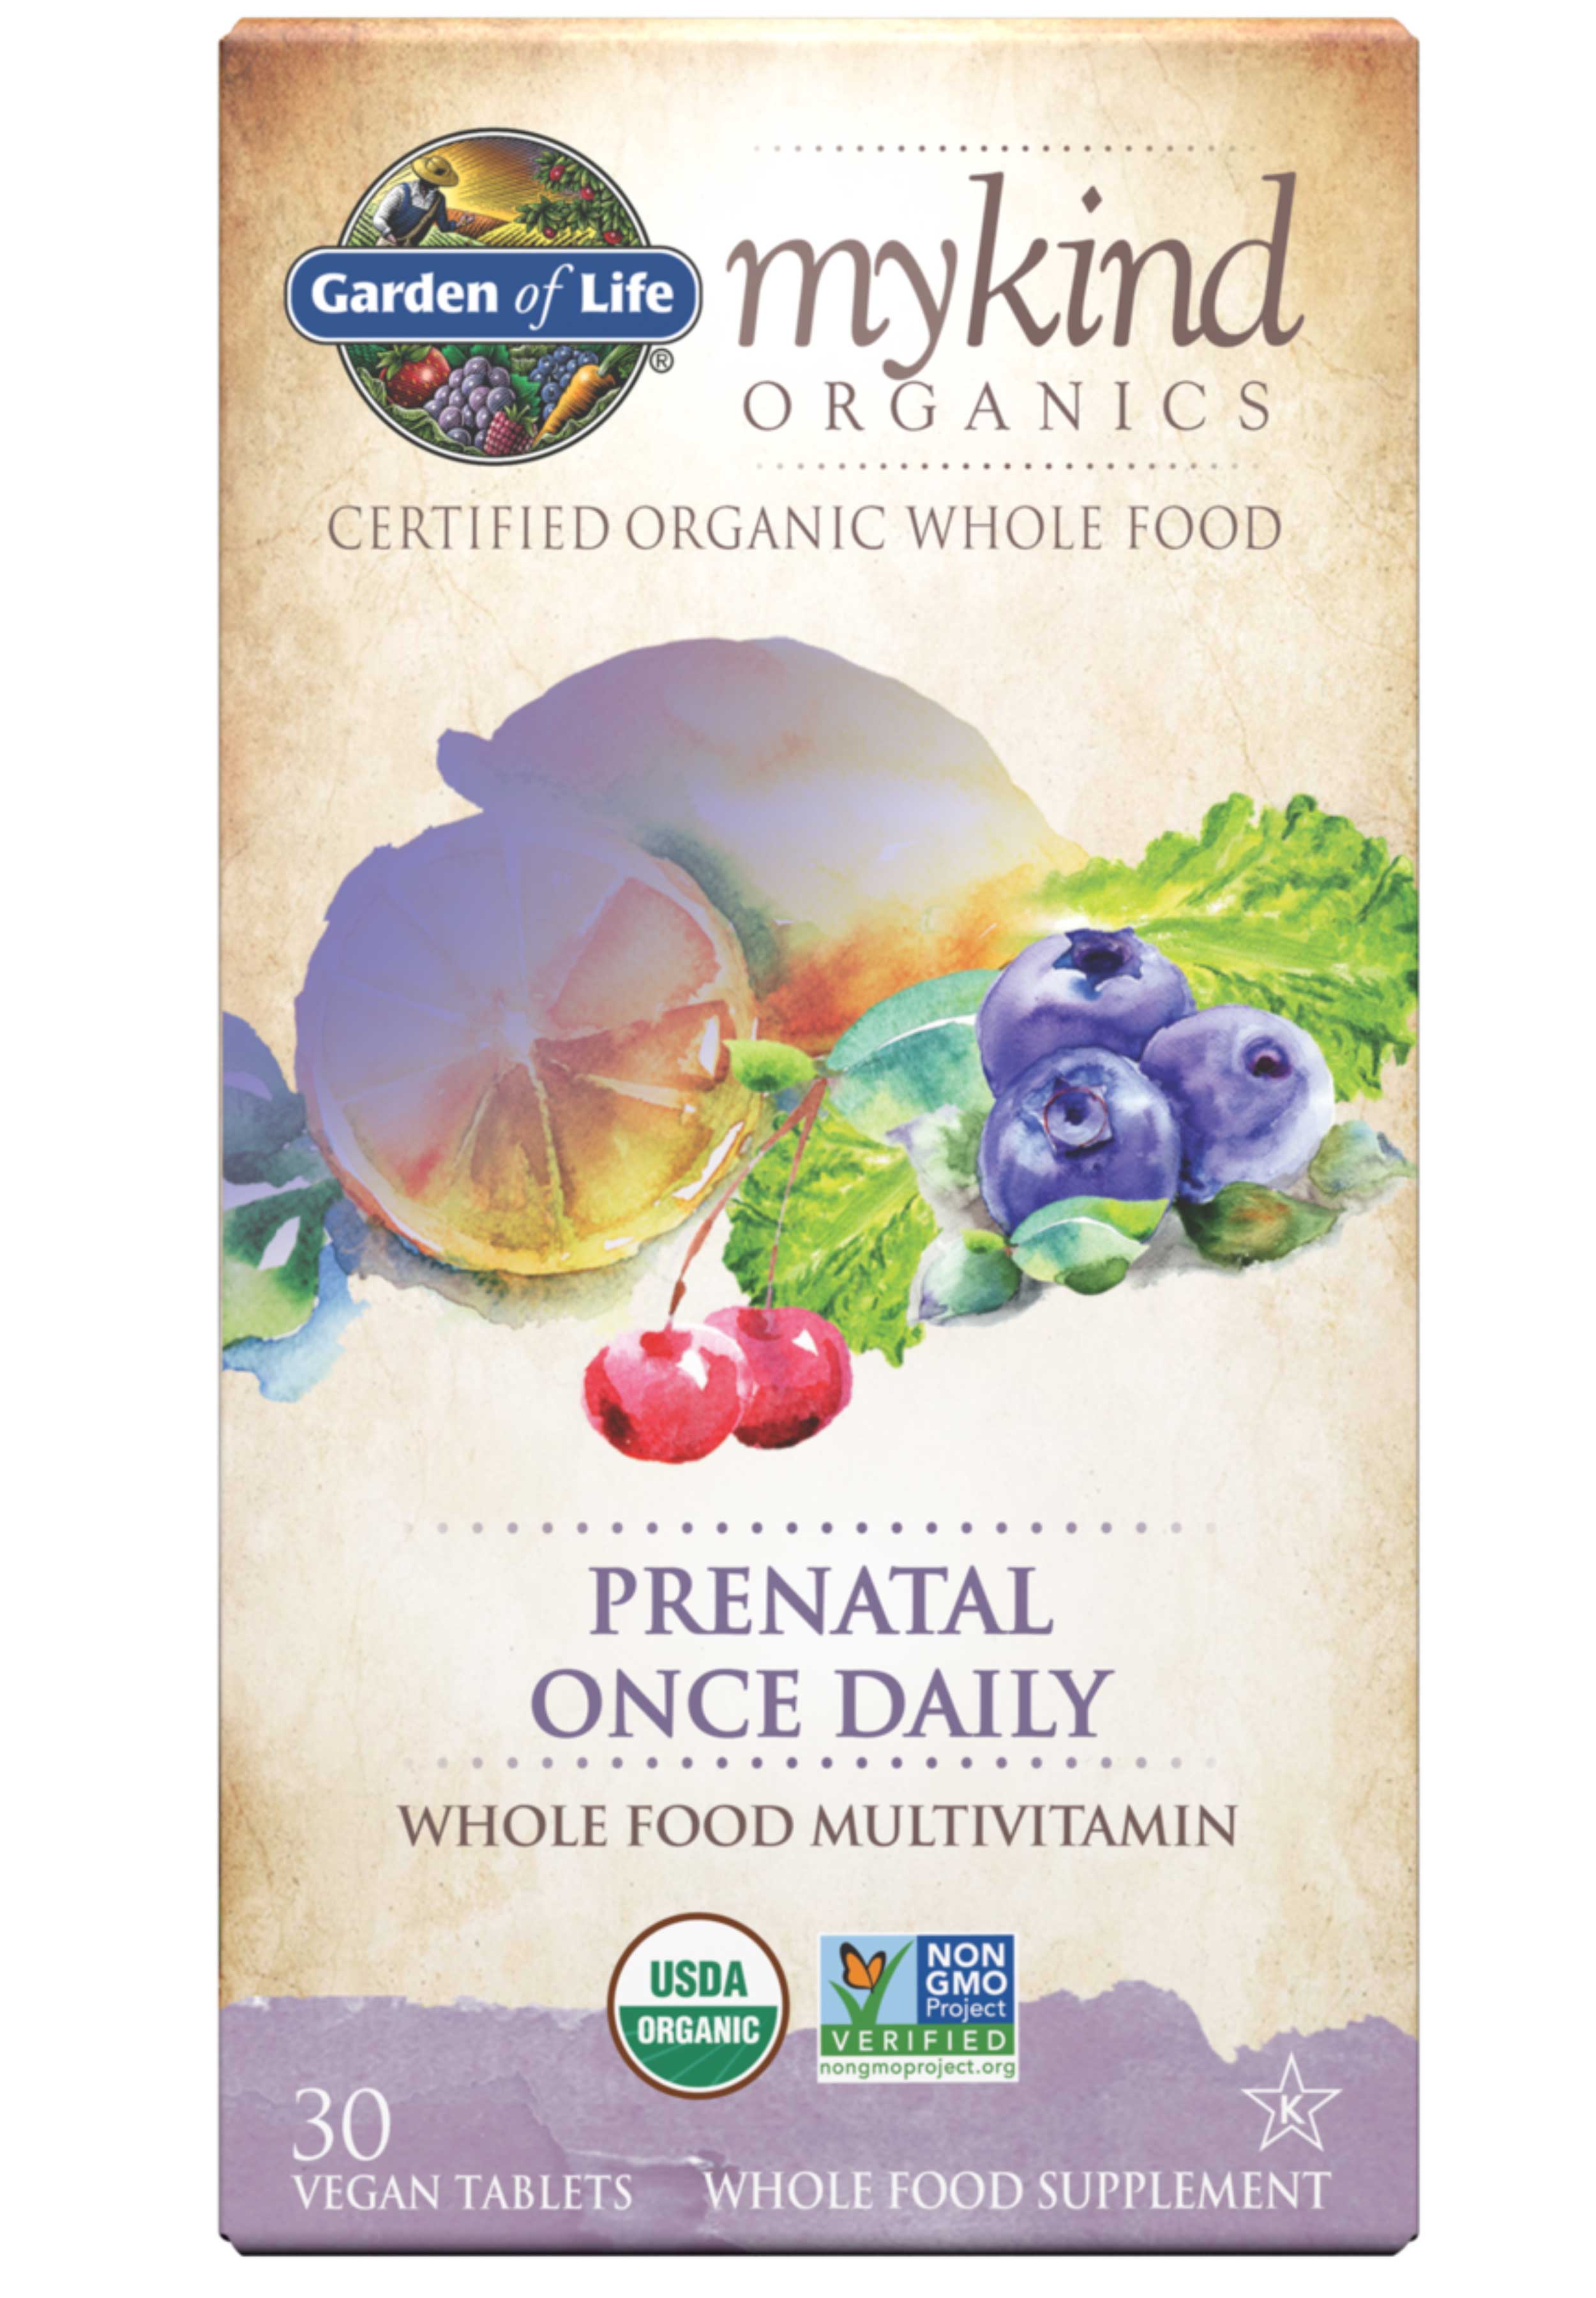 Garden of Life mykind Organics Prenatal Once Daily